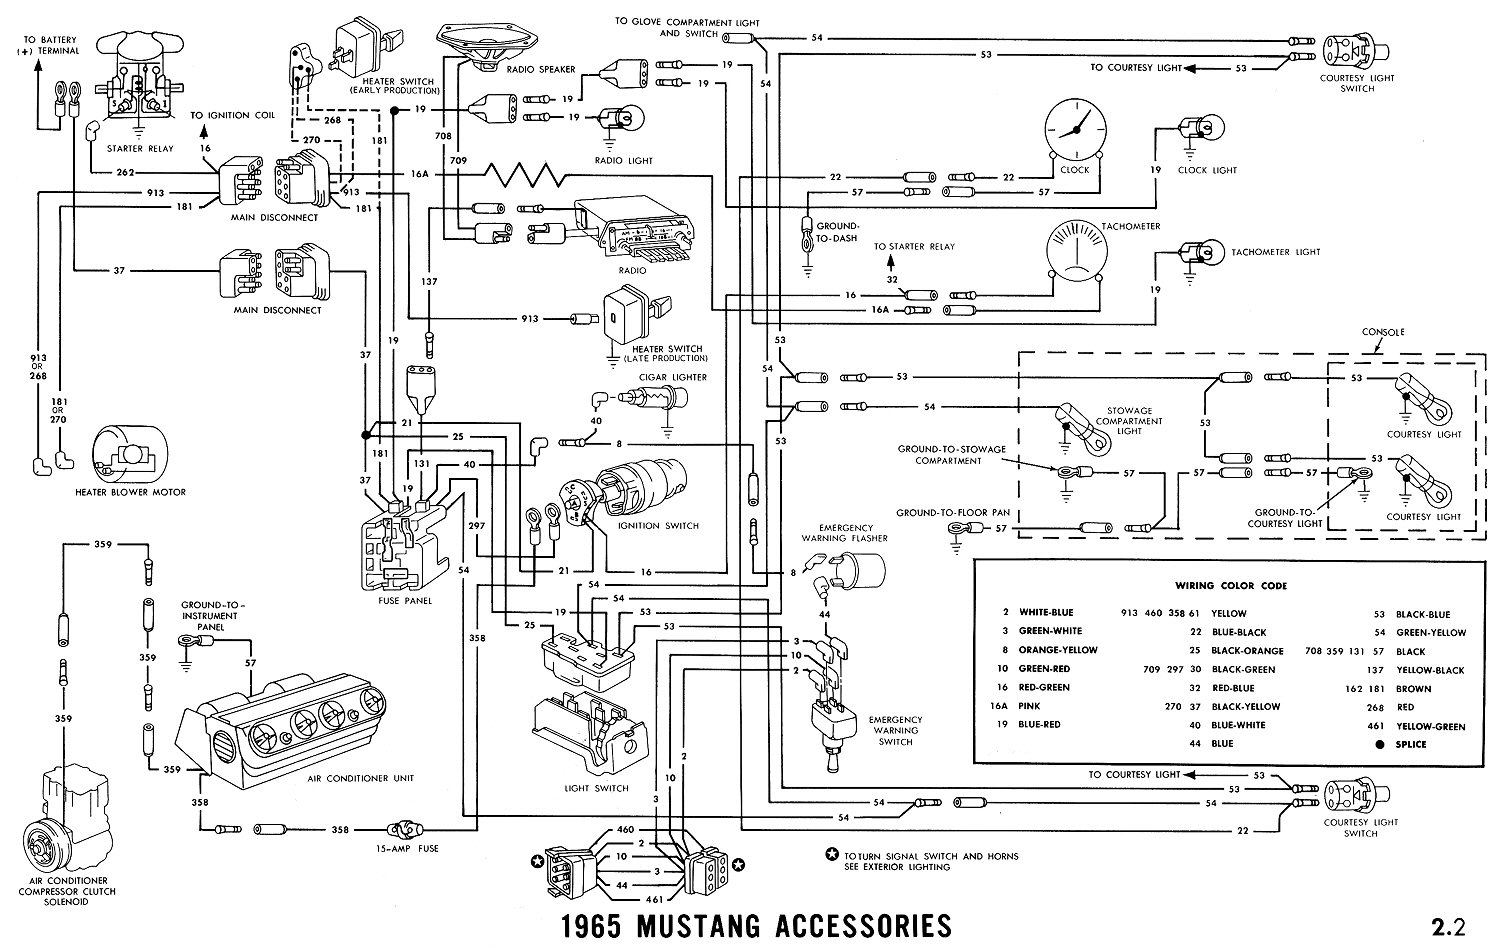 1966 Mustang Wiring Diagrams - All Wiring Diagram Data - 1966 Mustang Wiring Diagram